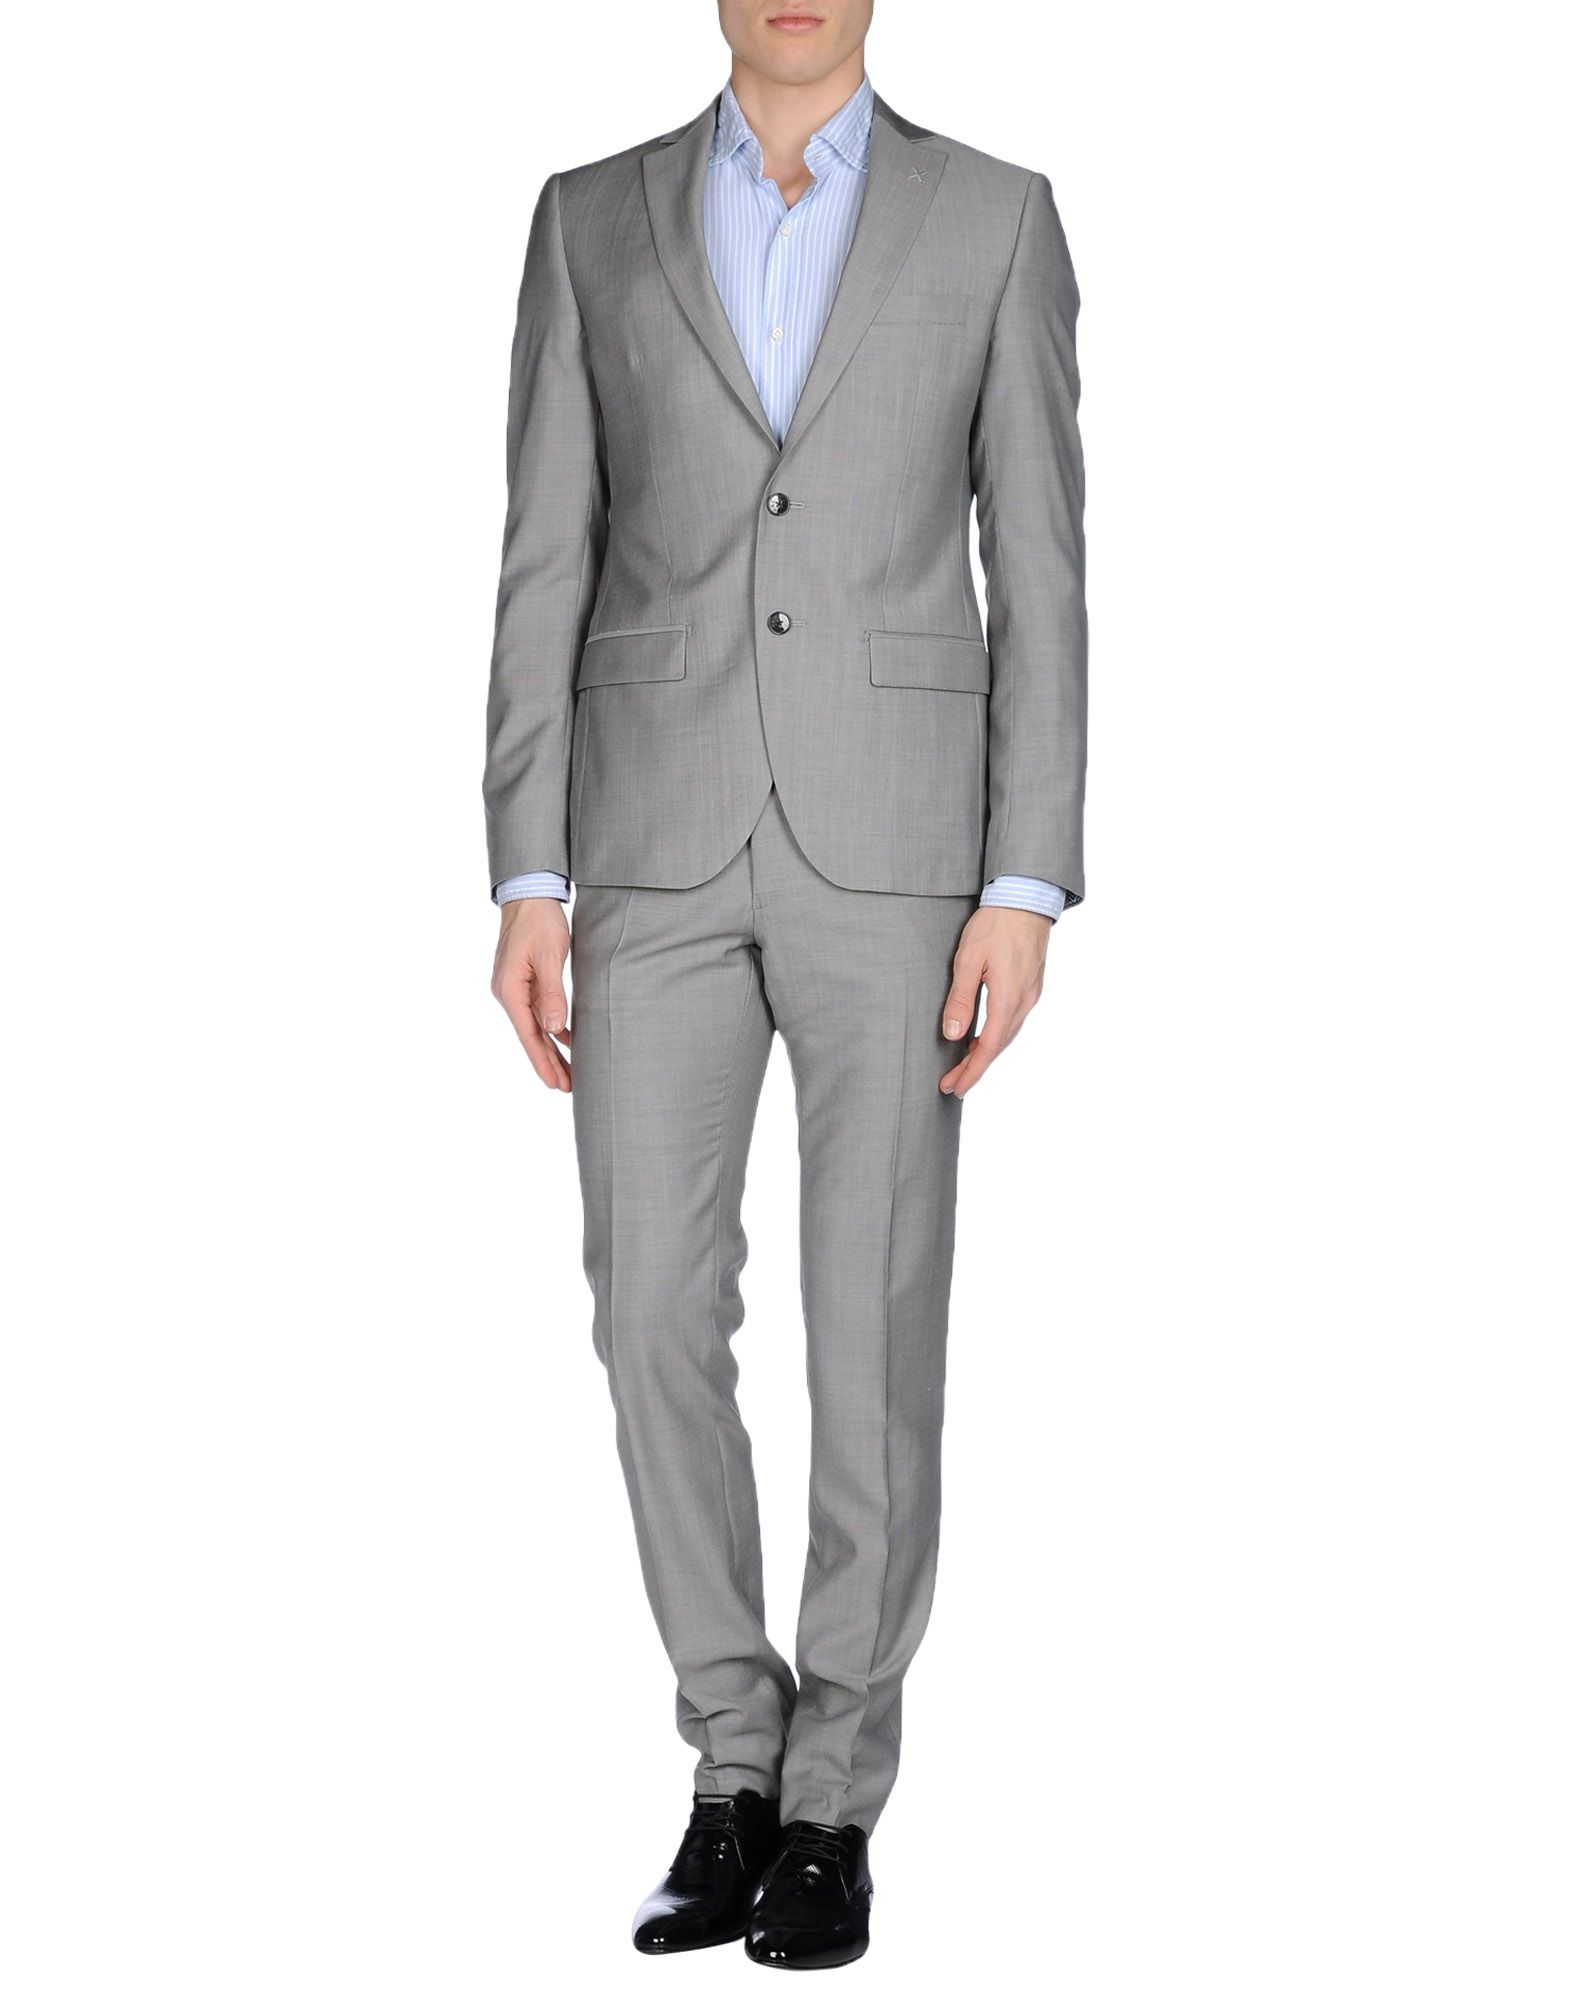 Lyst - Christian Lacroix Suit in Gray for Men